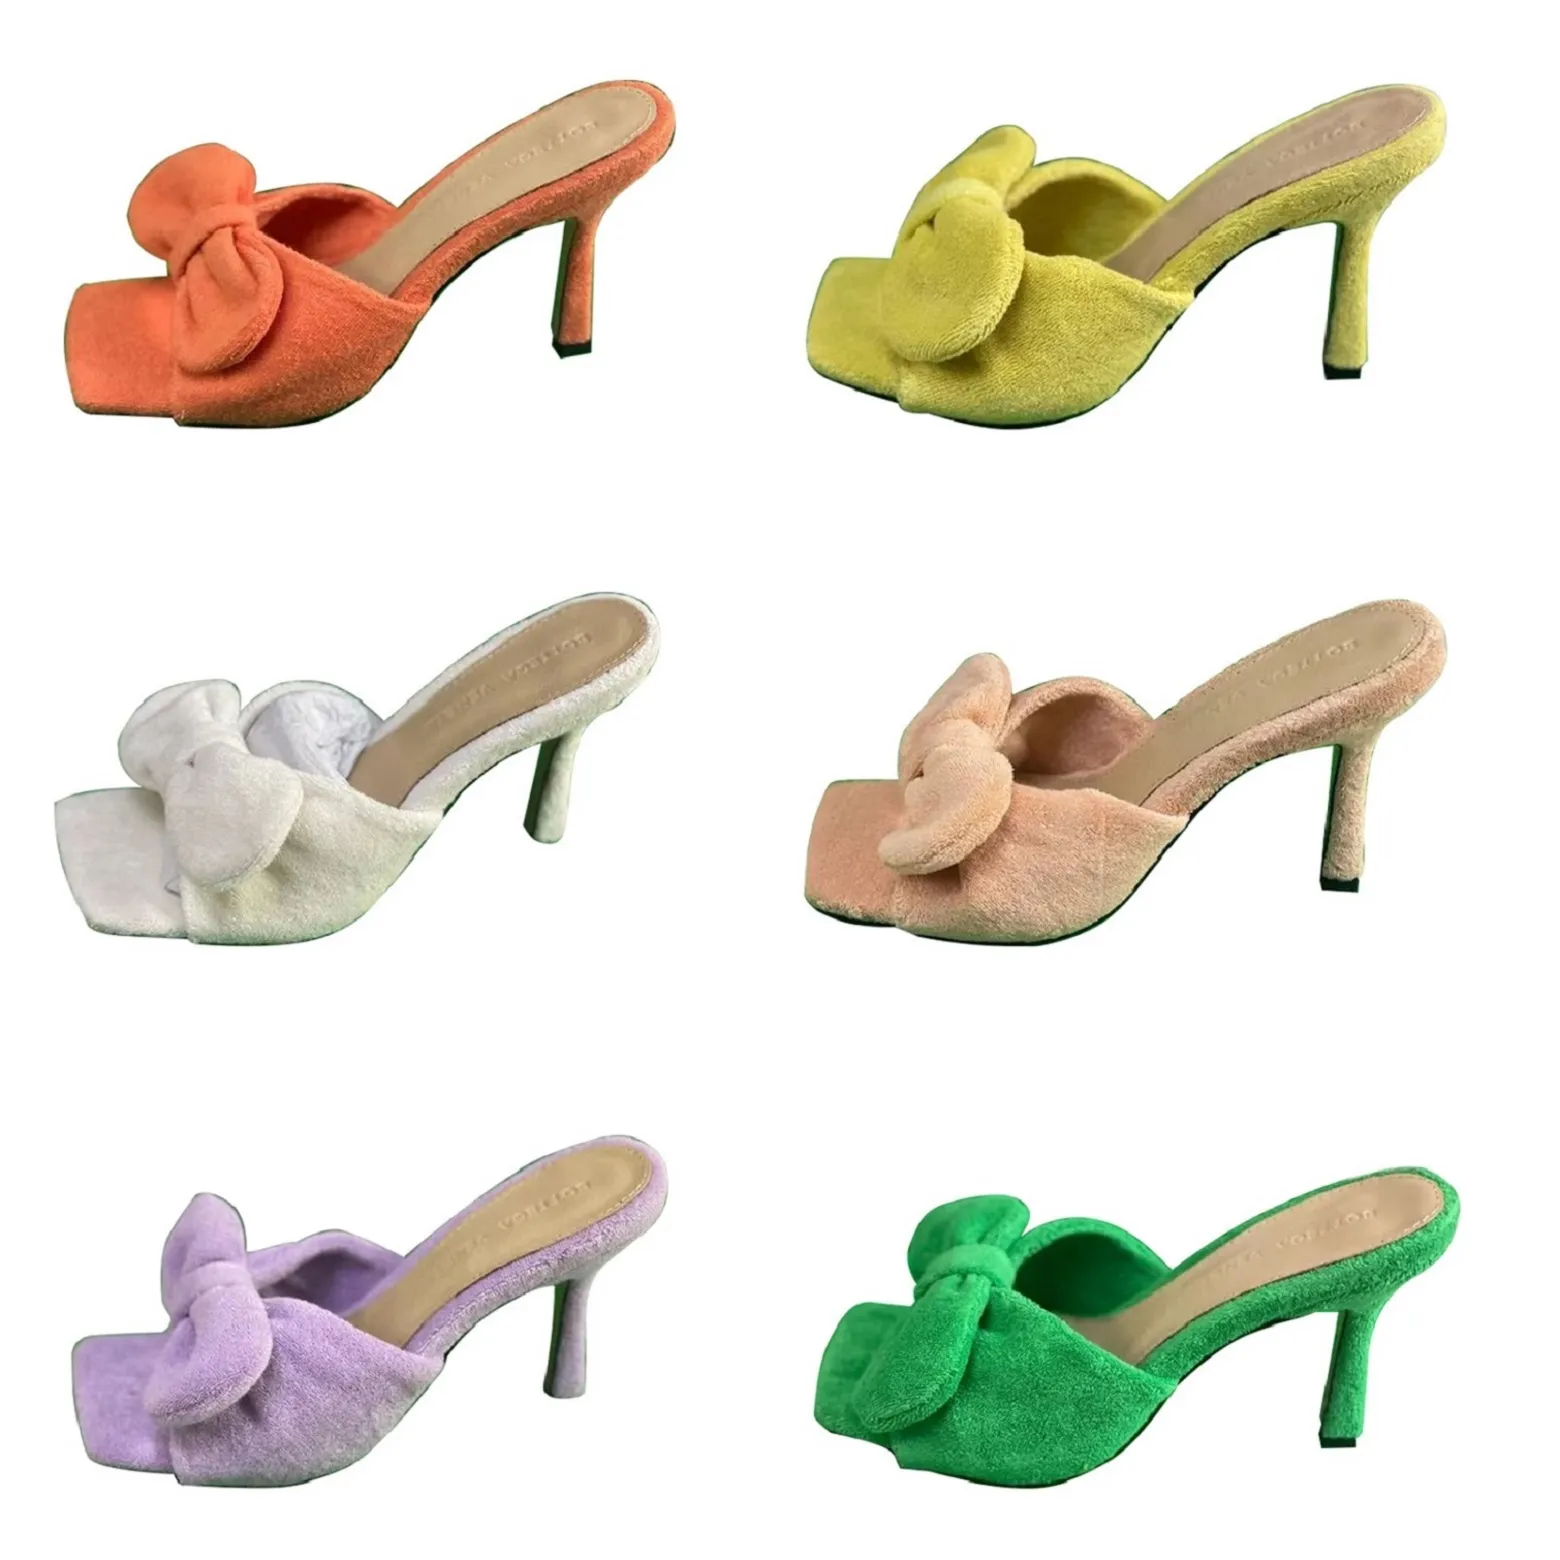 2022 Designer Women Bowtie Sandals Summer Slipper Leather Handduk Mules Slides Sandal Sexy Party High Heels 9cm Sandals Shoes With Box No339